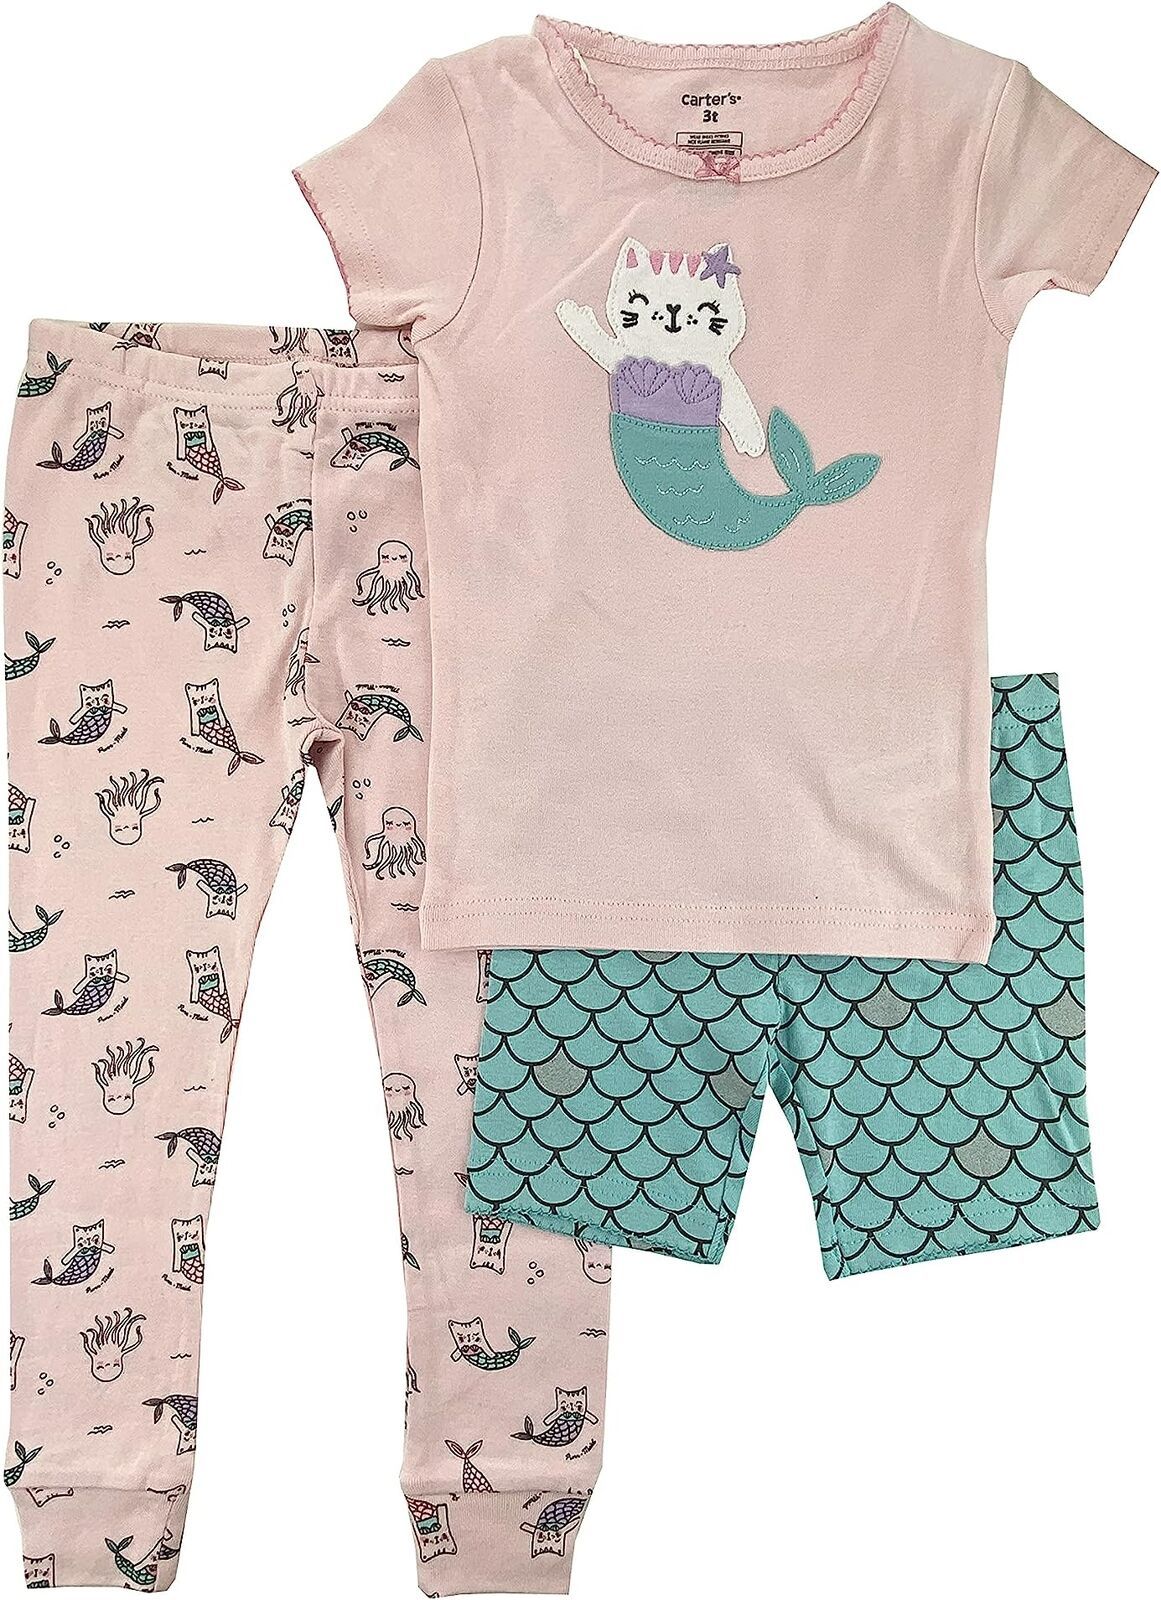 Primary image for allbrand365 designer Girls/Boys Printed 3 Piece Soft Cotton Pajama Set Size 3T